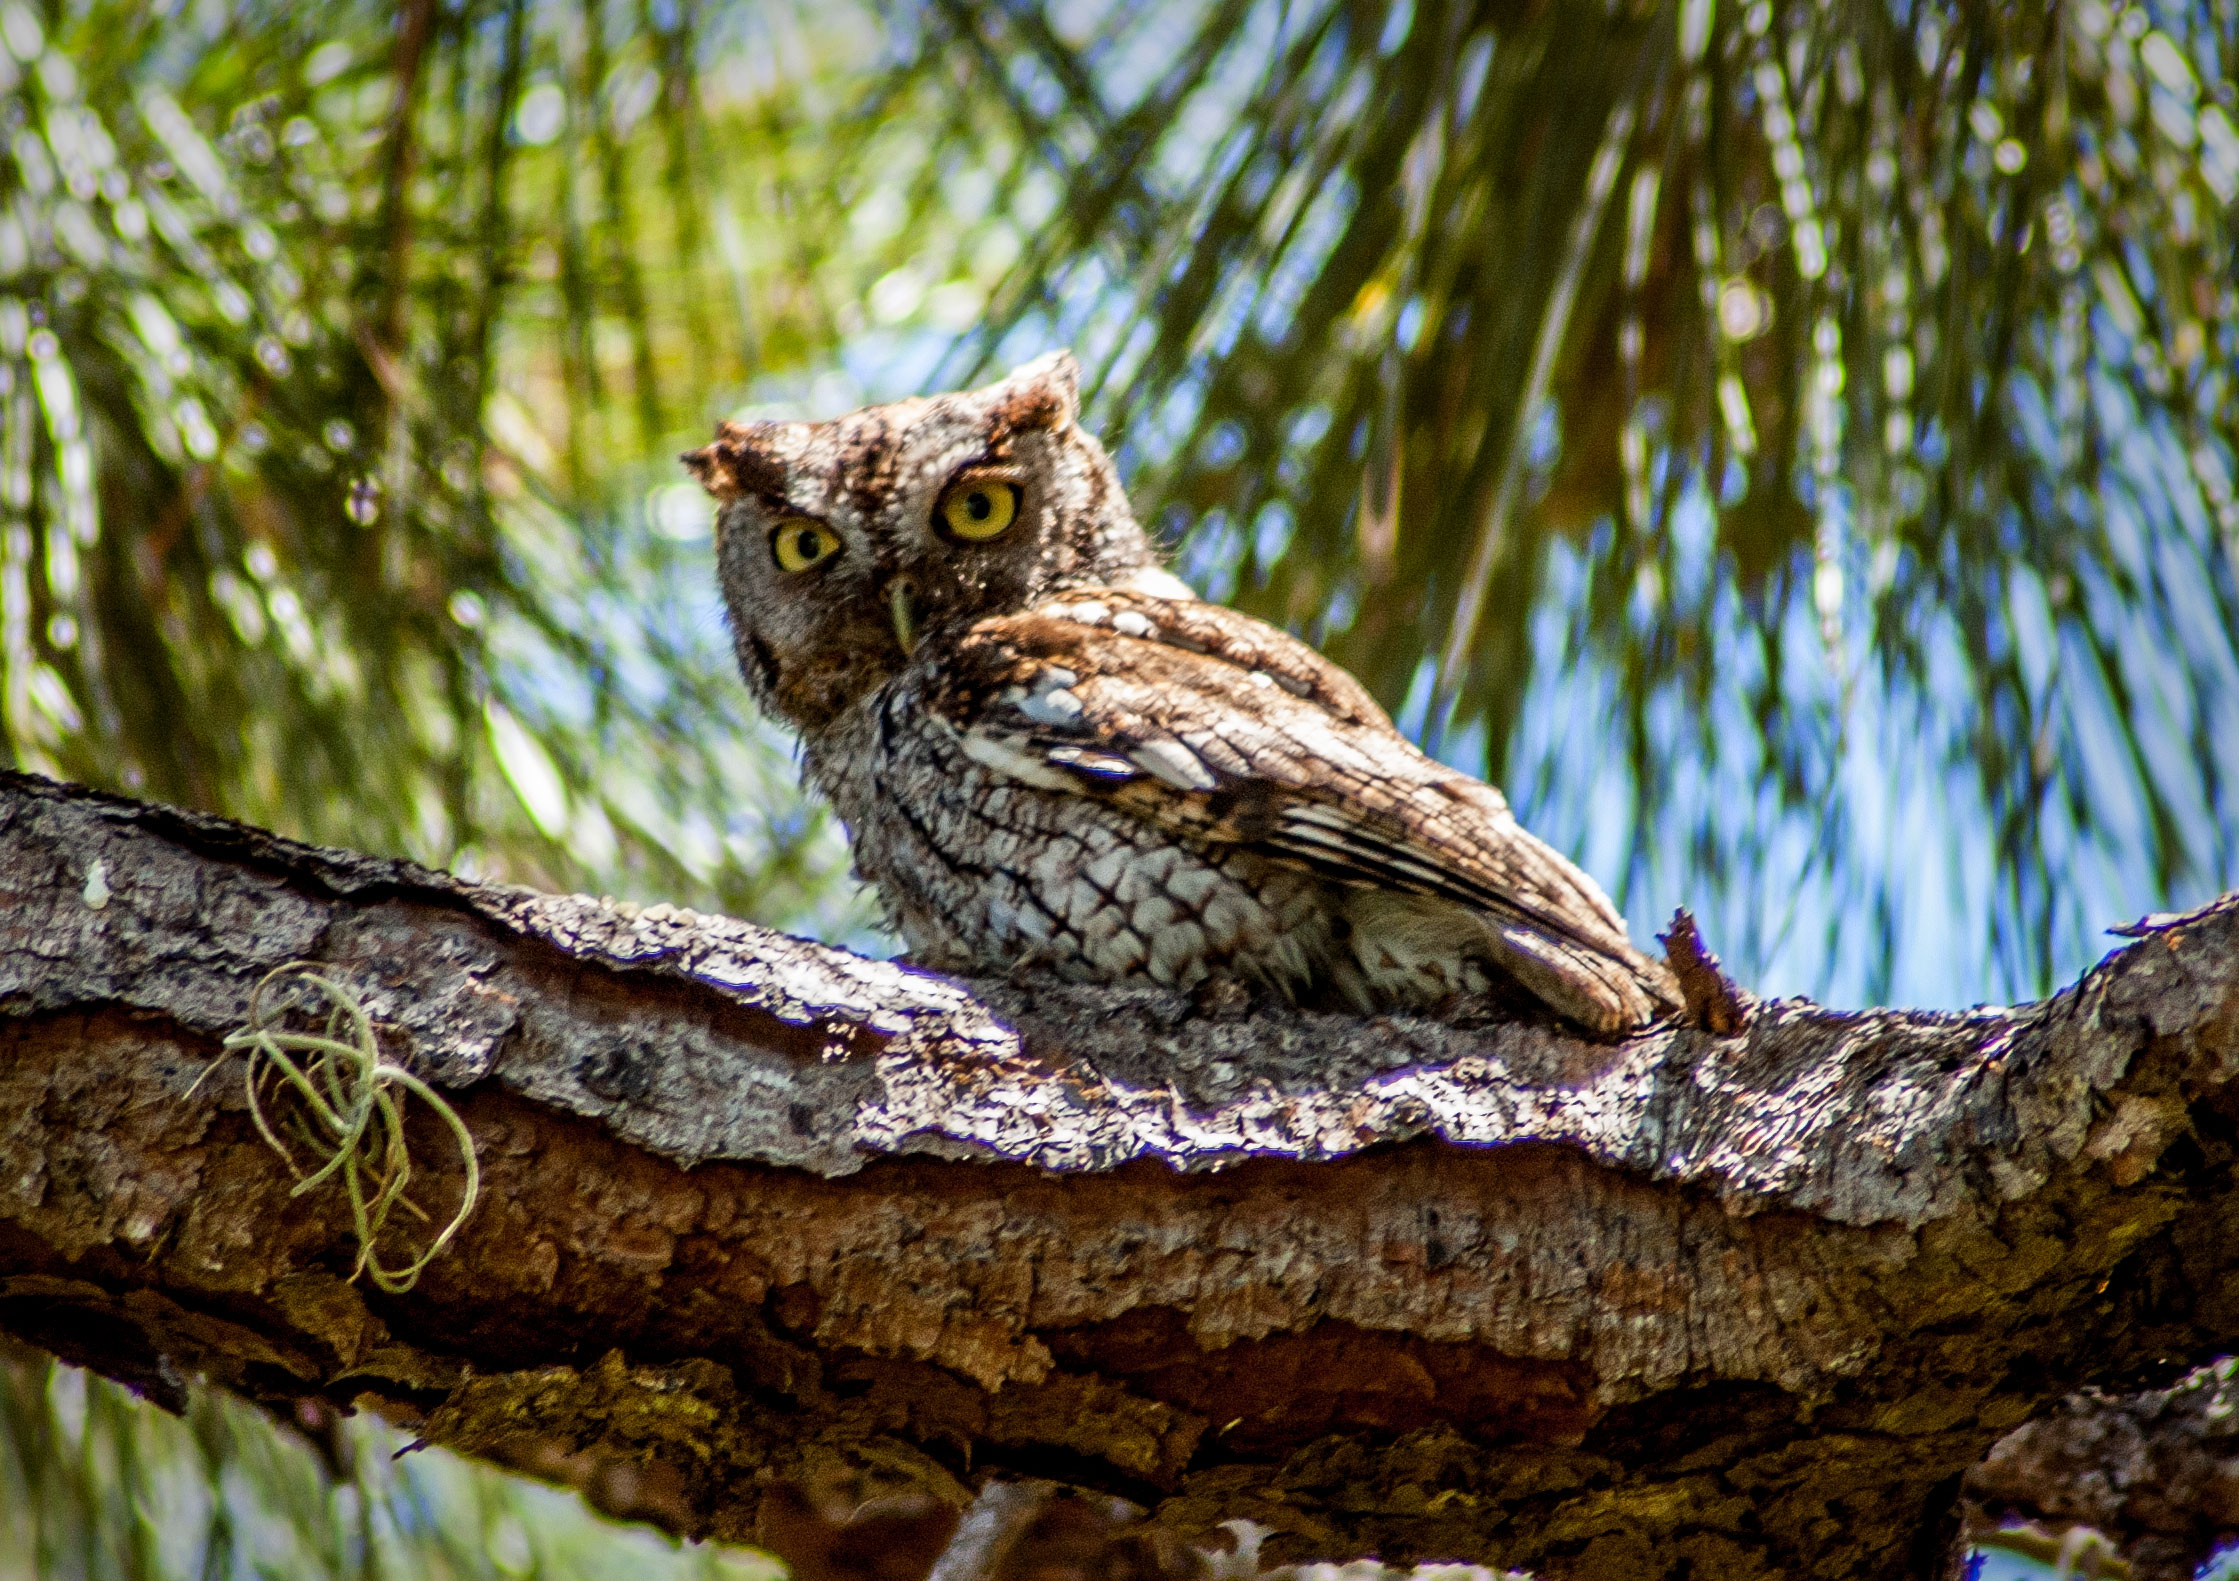 Owl News